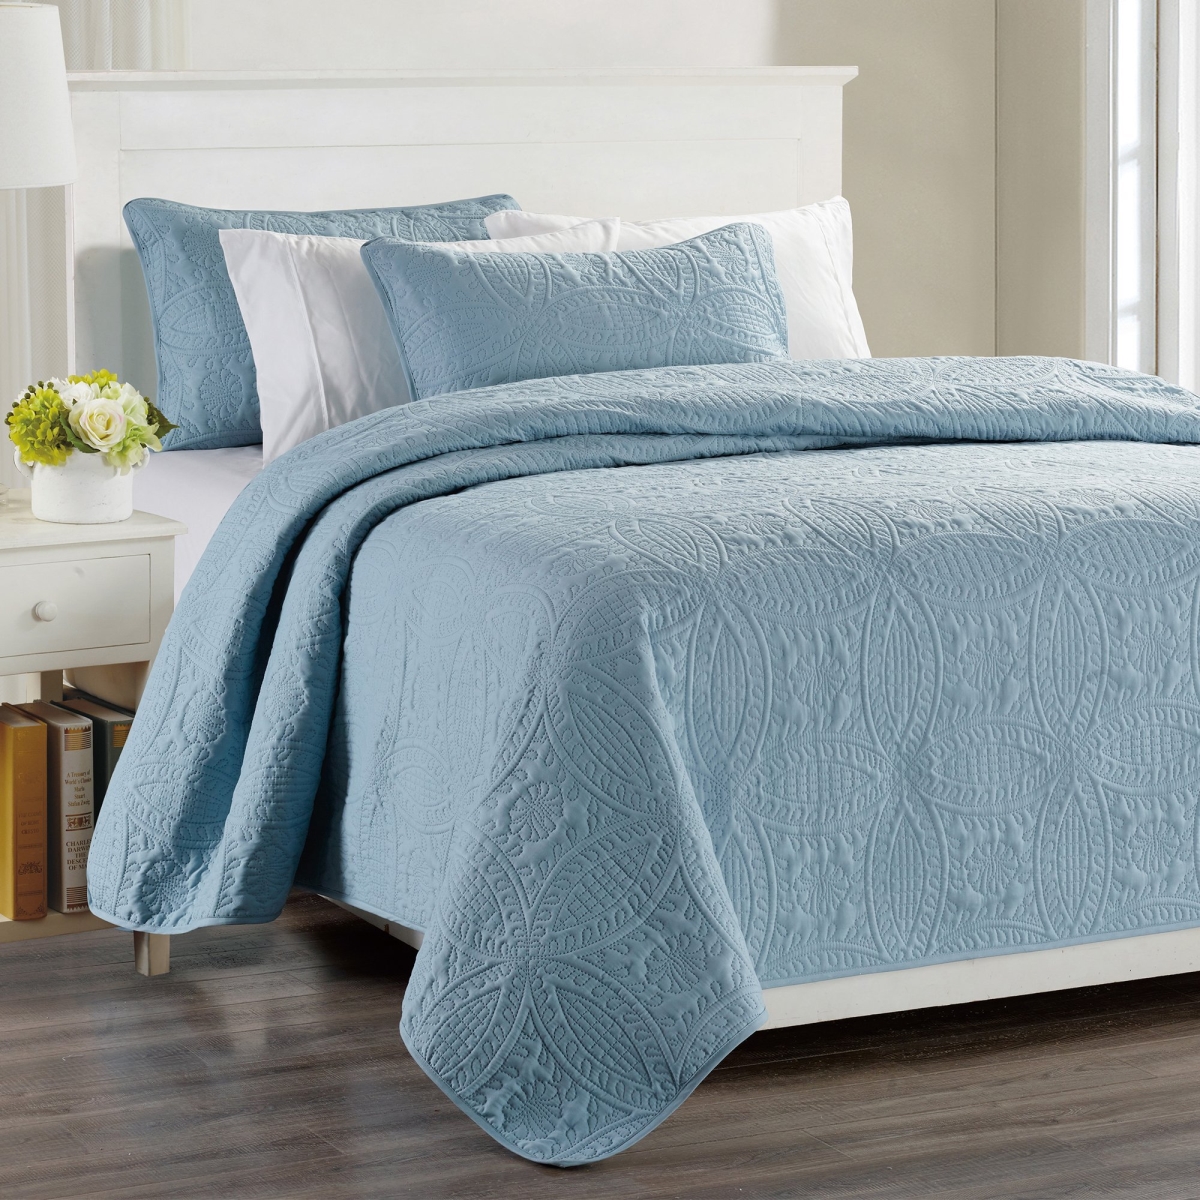 3 Piece Millano Chambrey Quilt Set, Blue - King Size